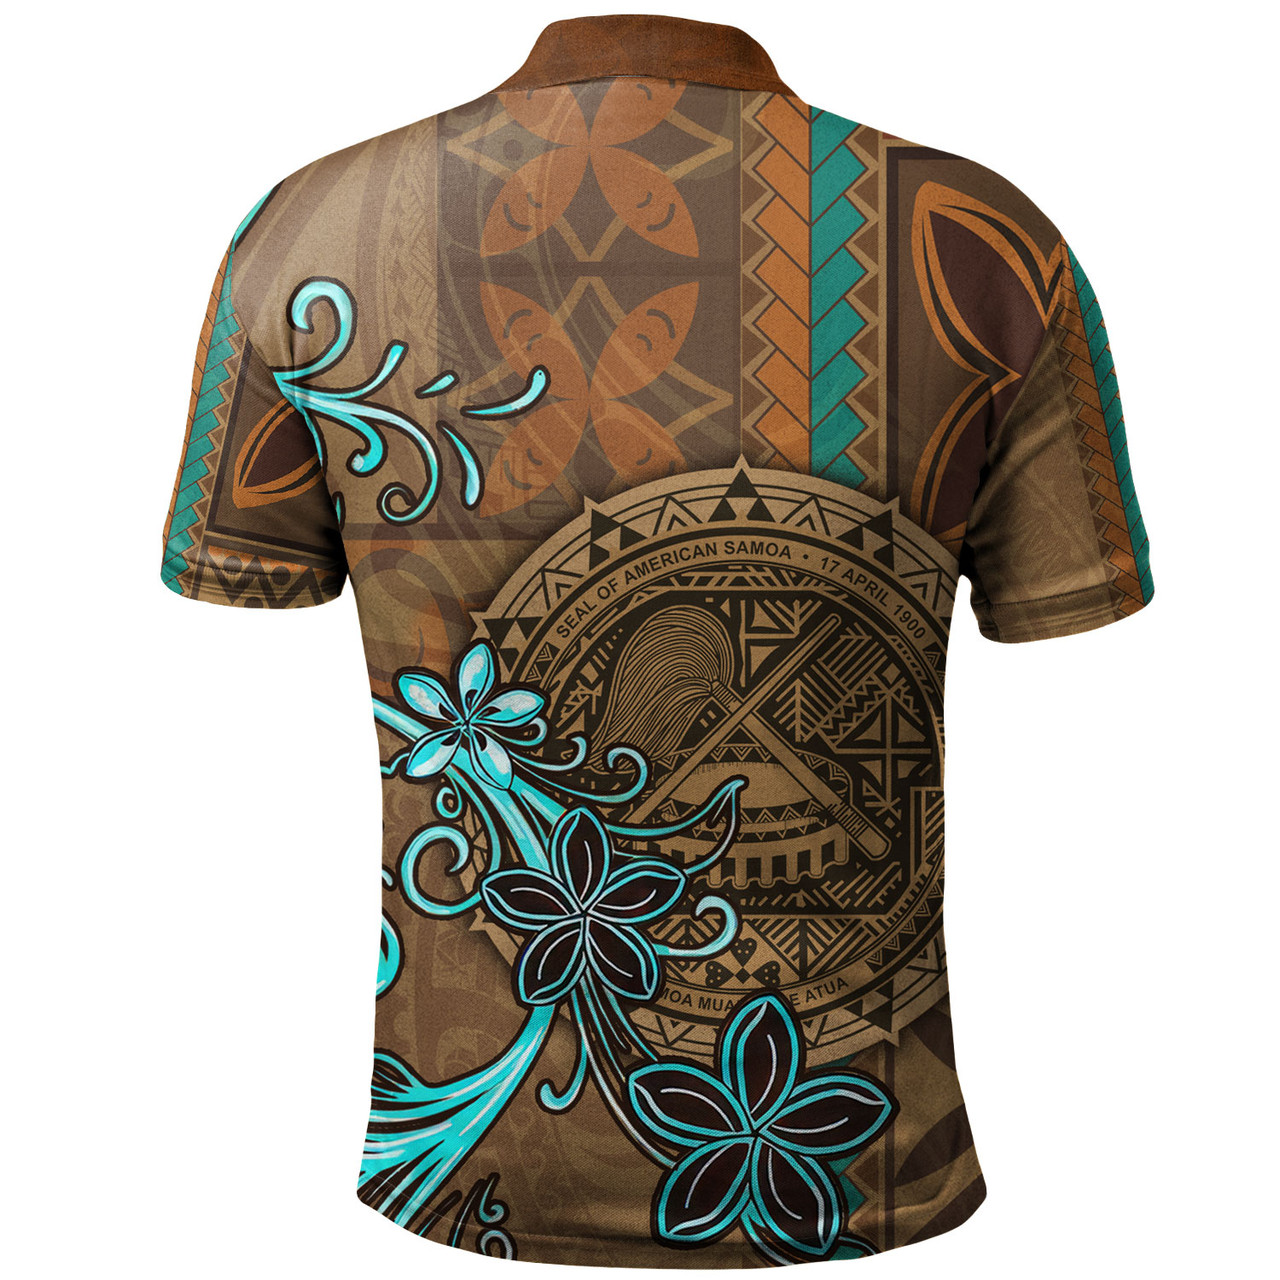 American Samoa Polo Shirt Polynesian Pattern Motif And Teal Boar Tusk